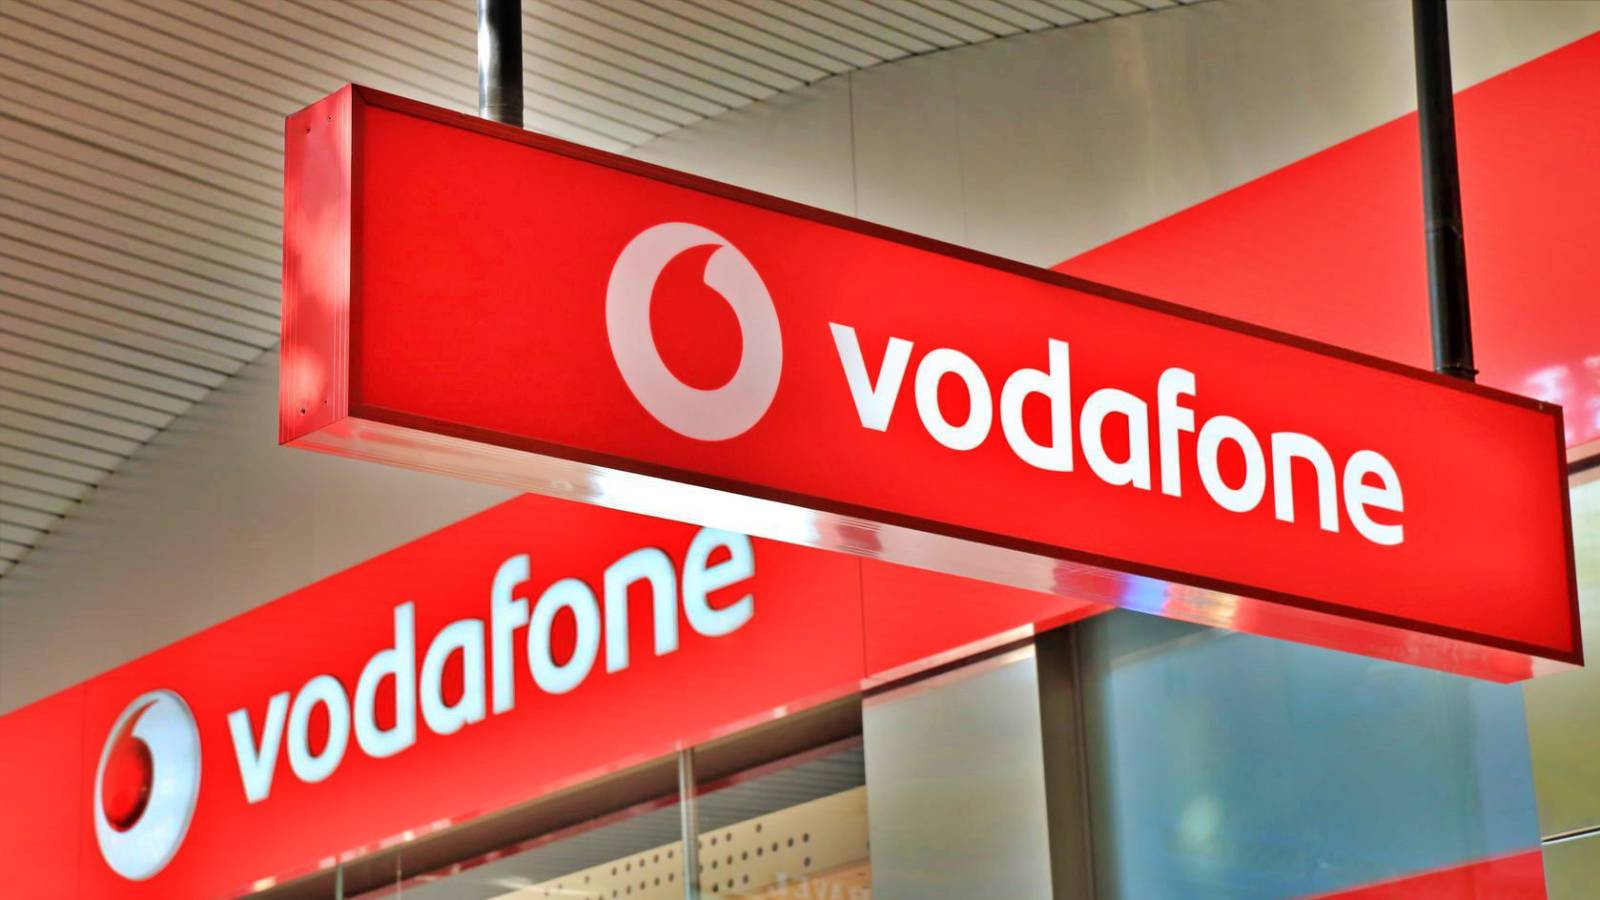 Vodafone performante